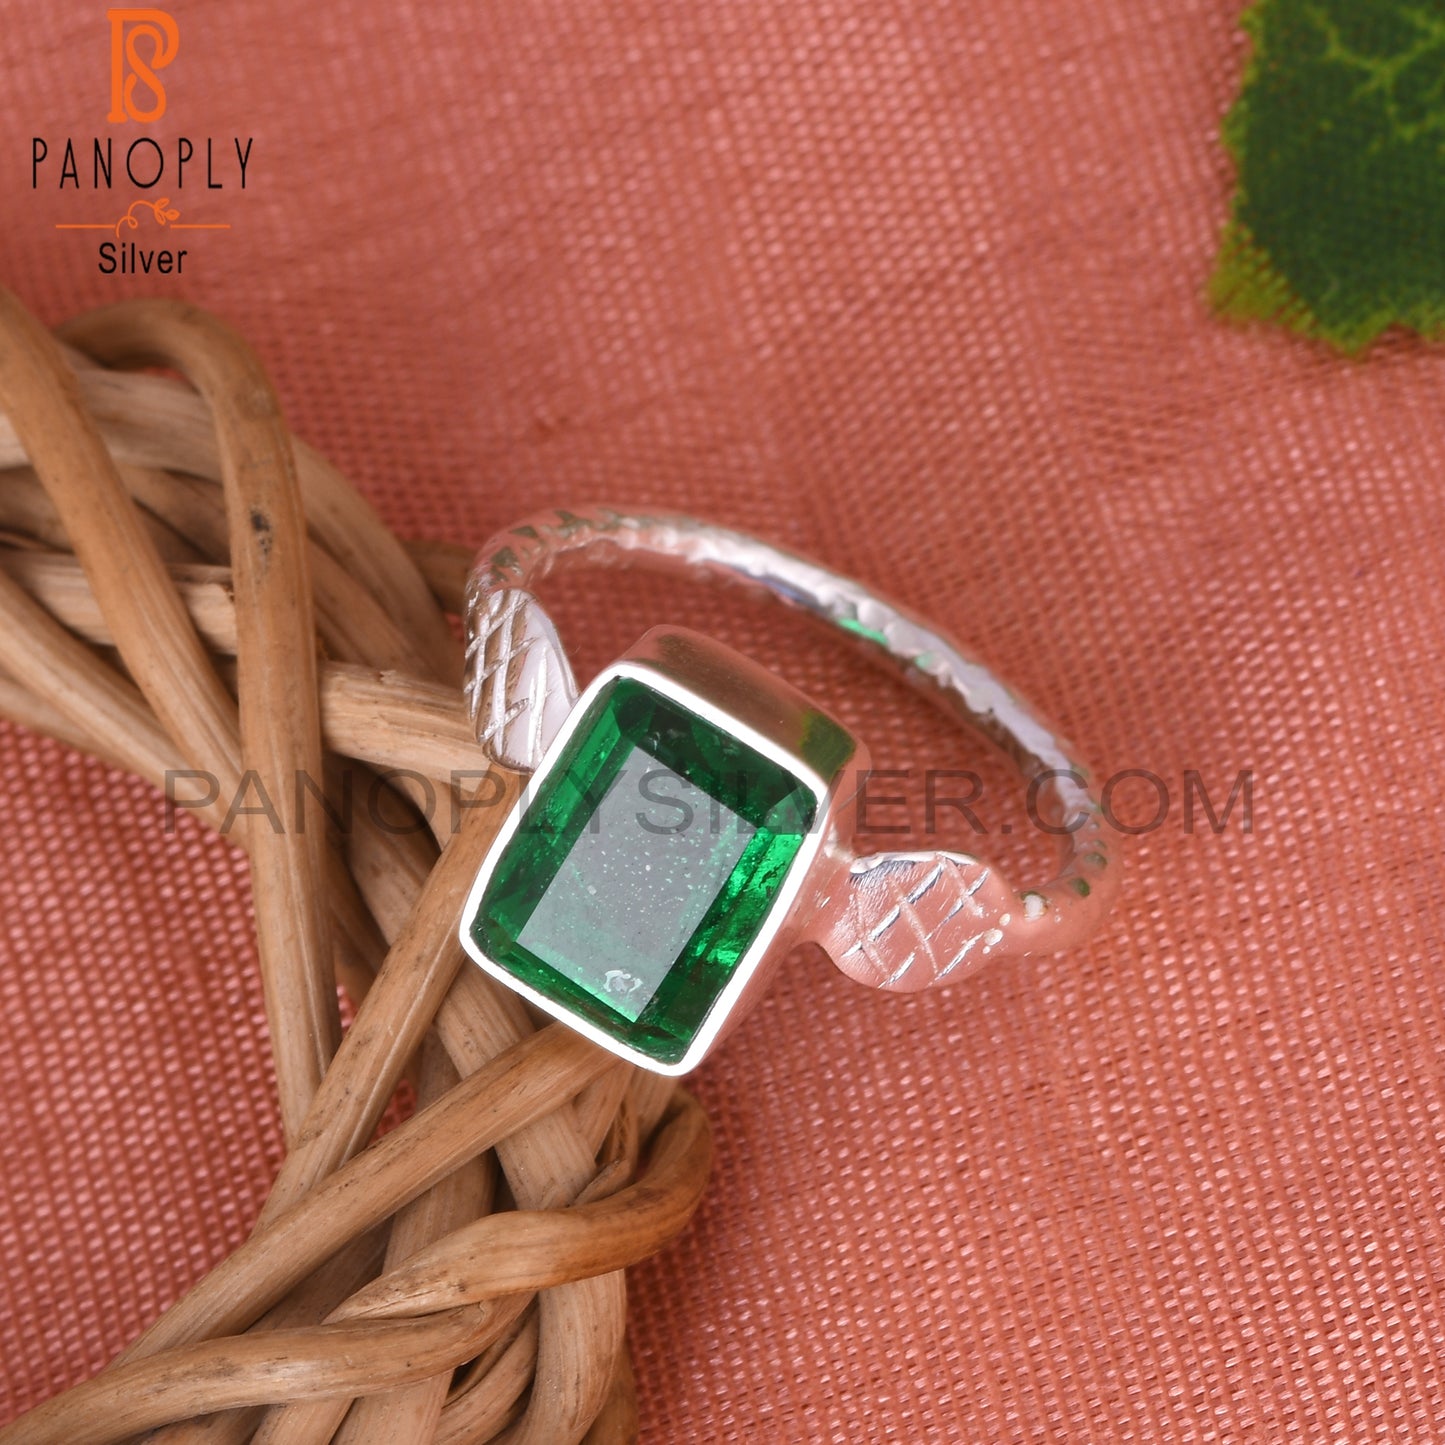 Doublet Zambian Emerald Quartz 925 Sterling Silver Ring